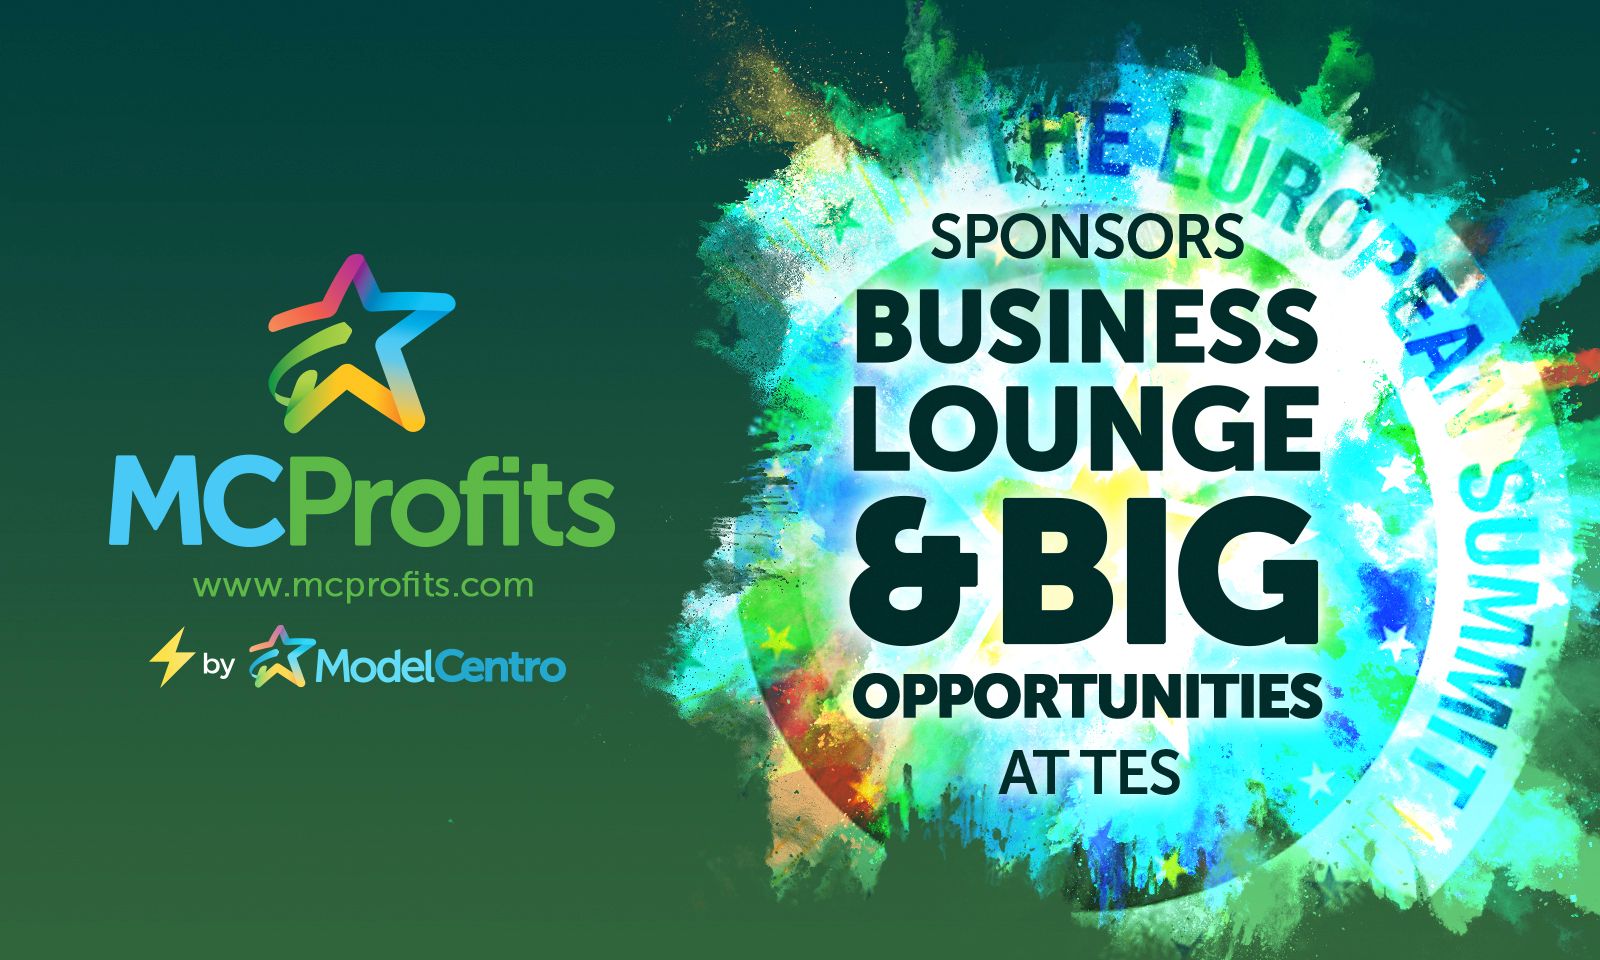 ModelCentro/MCProfits Sponsoring Business Lounge at TES